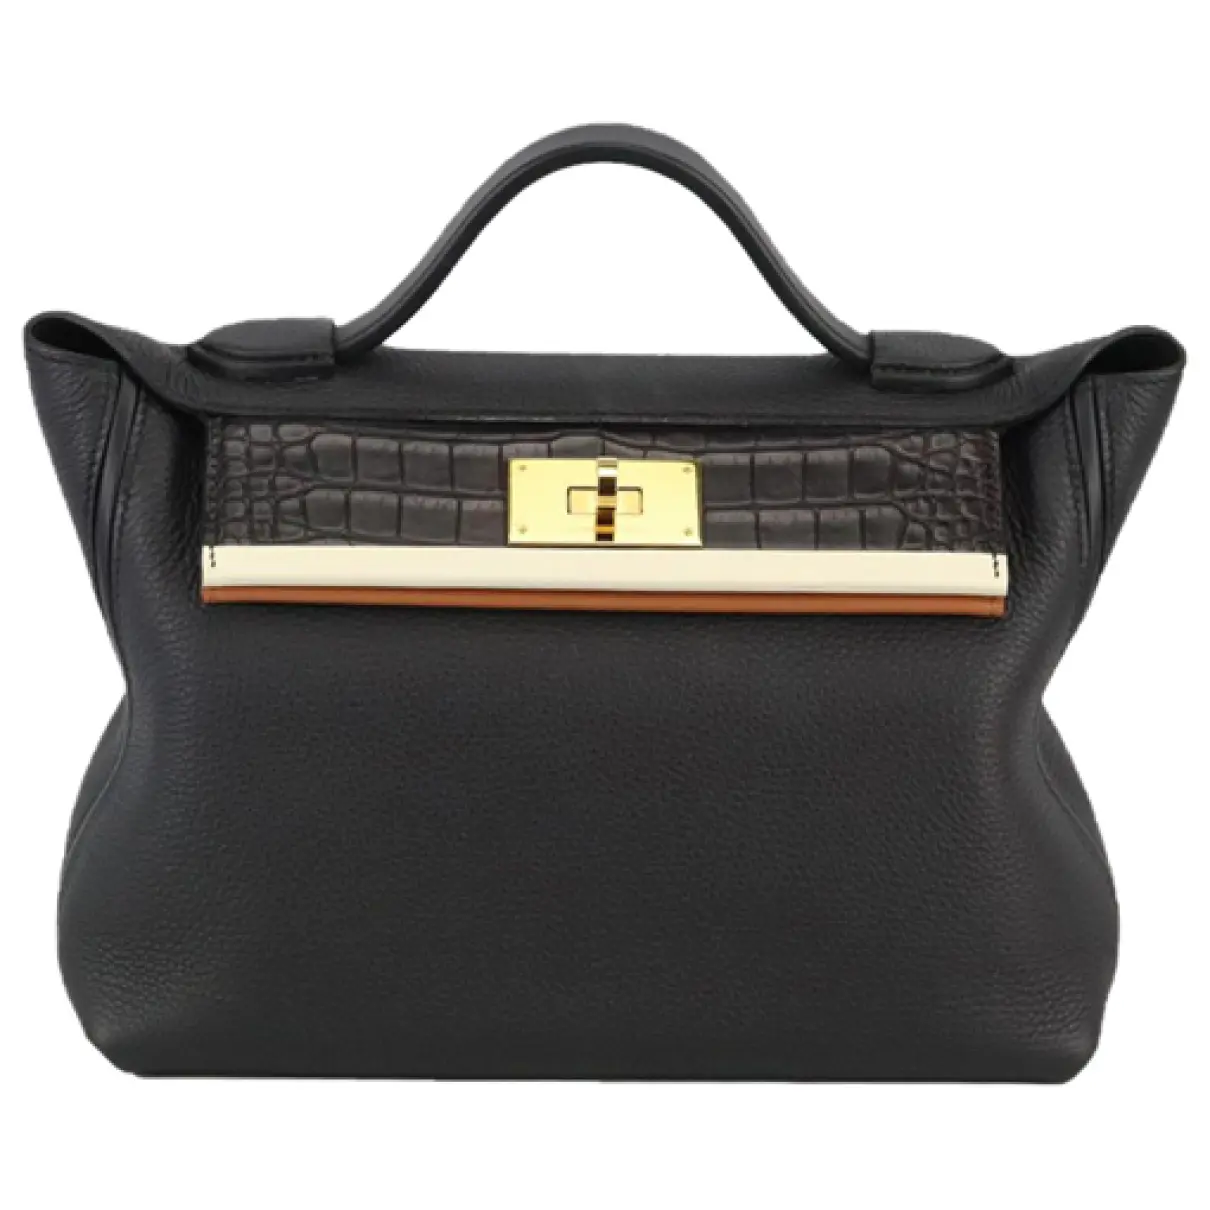 24/24 leather handbag